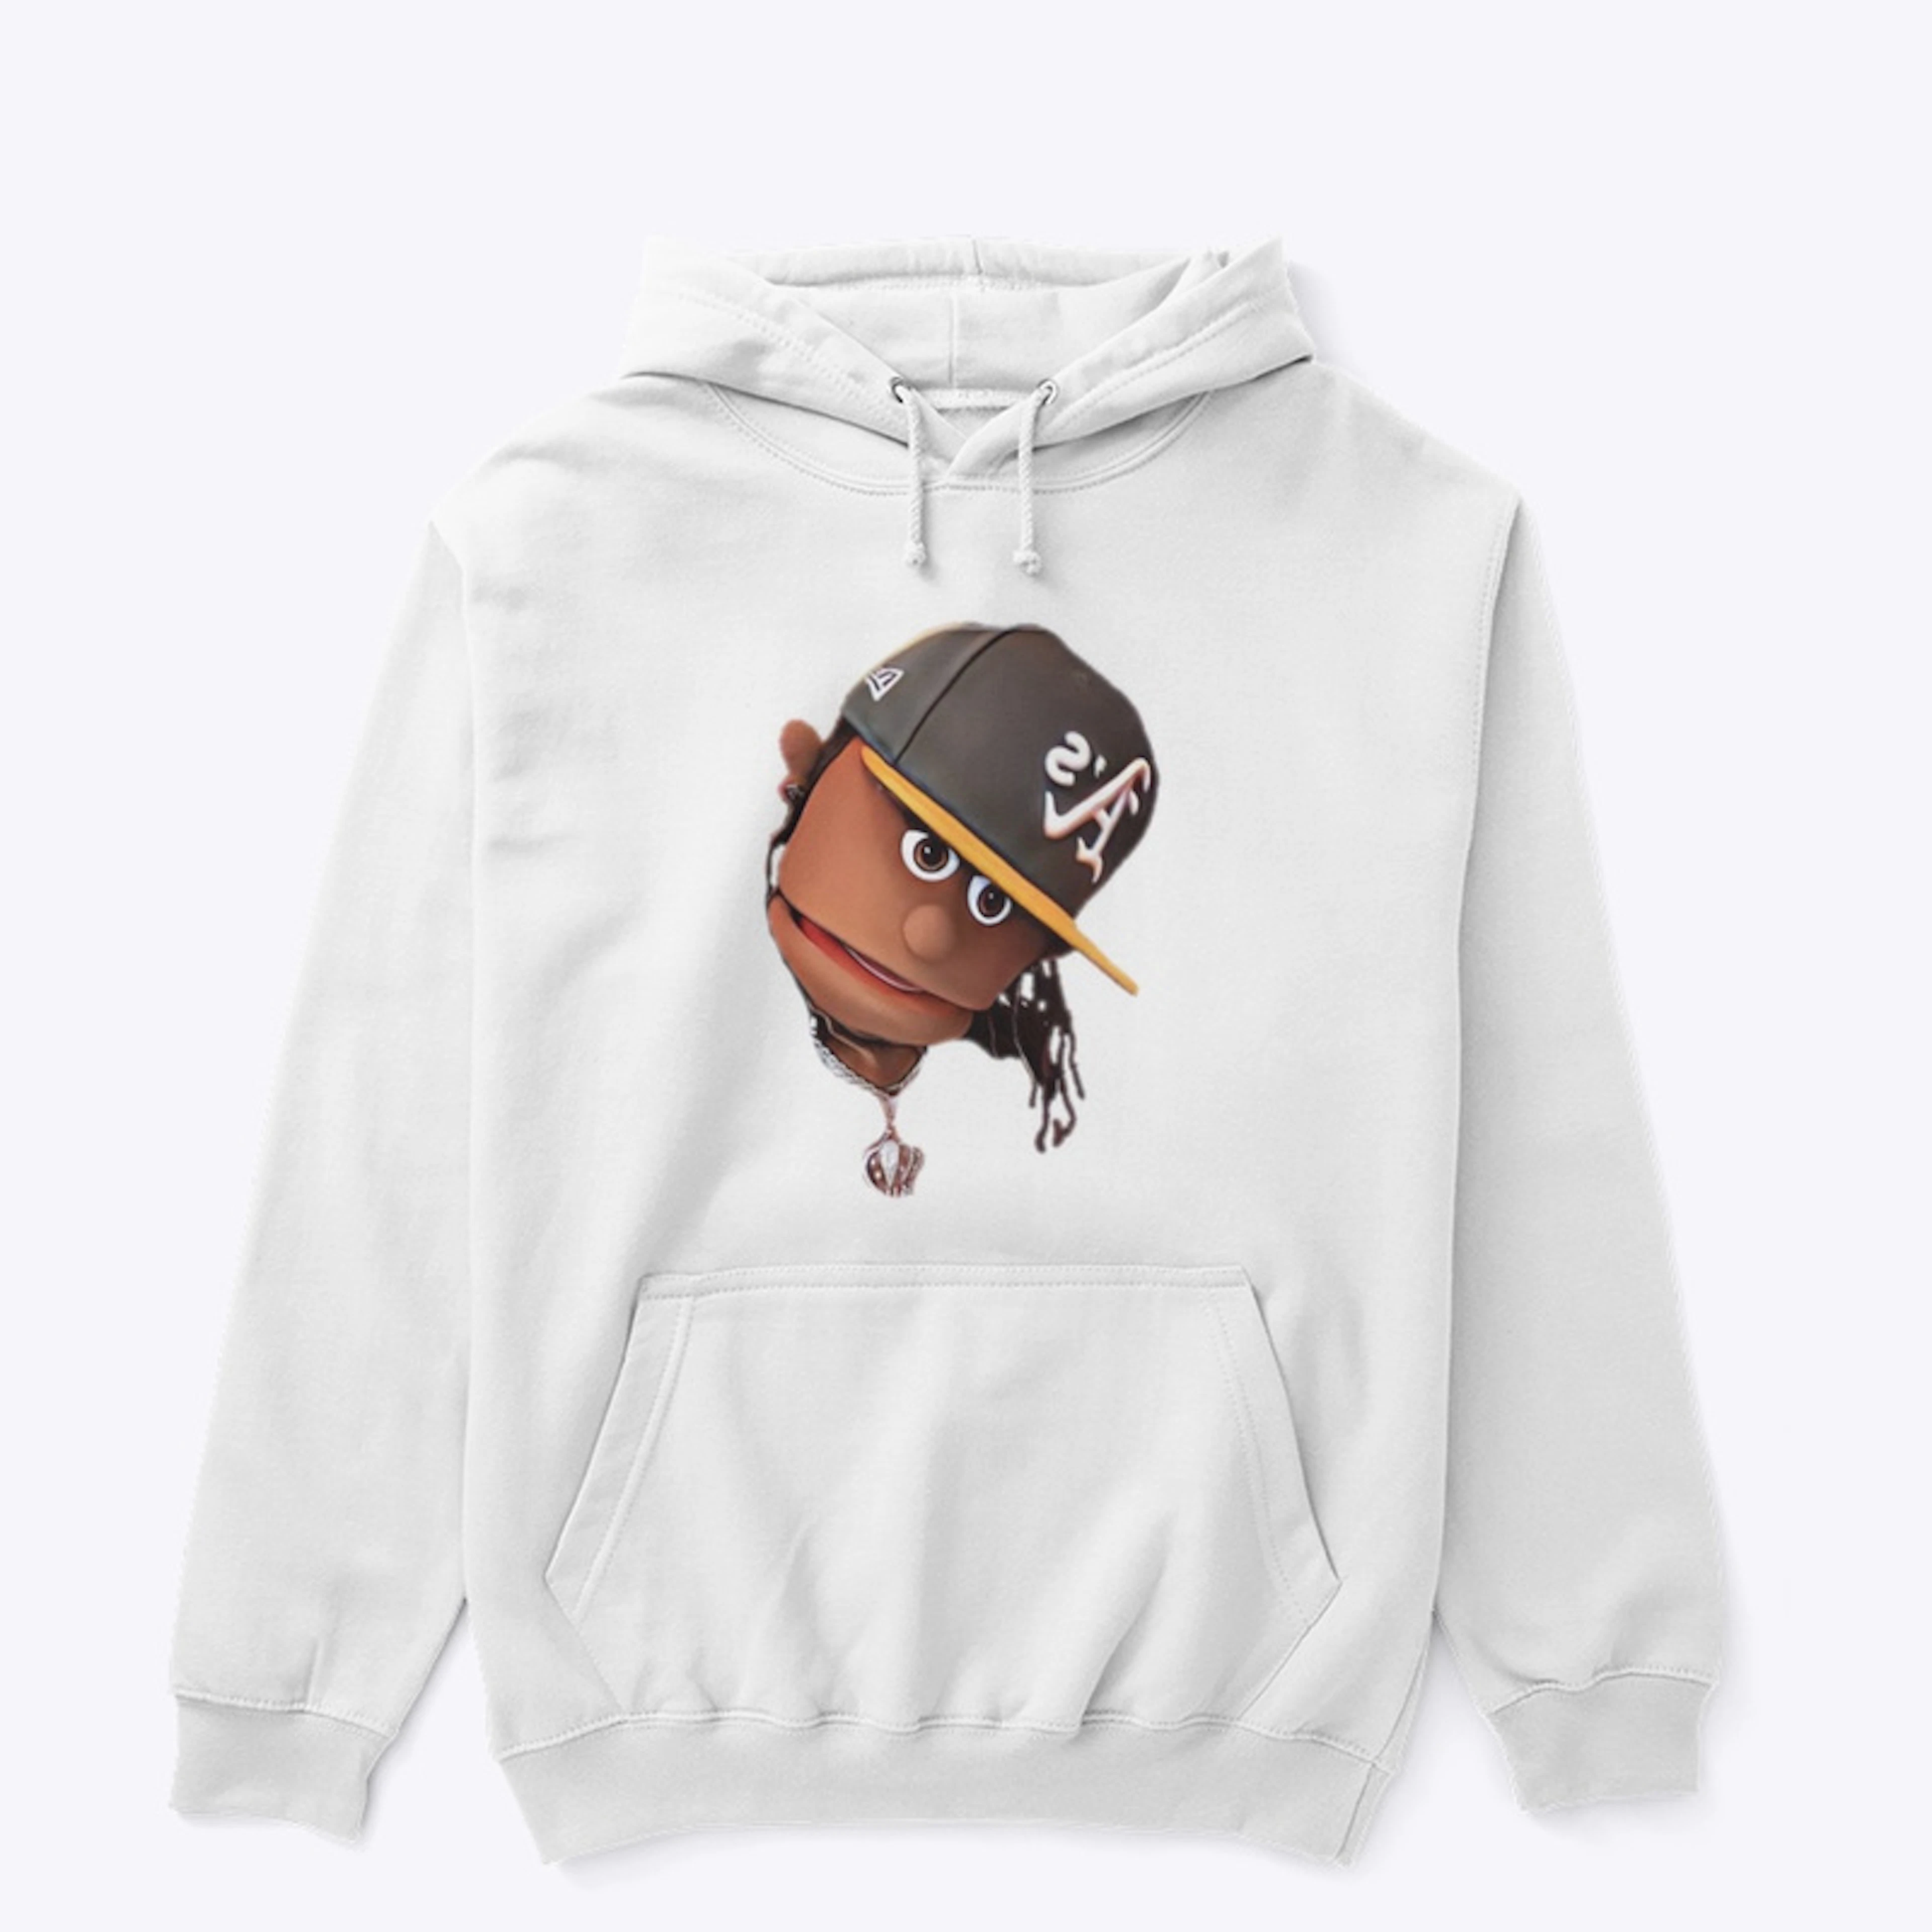 Dre limit edition hoodie